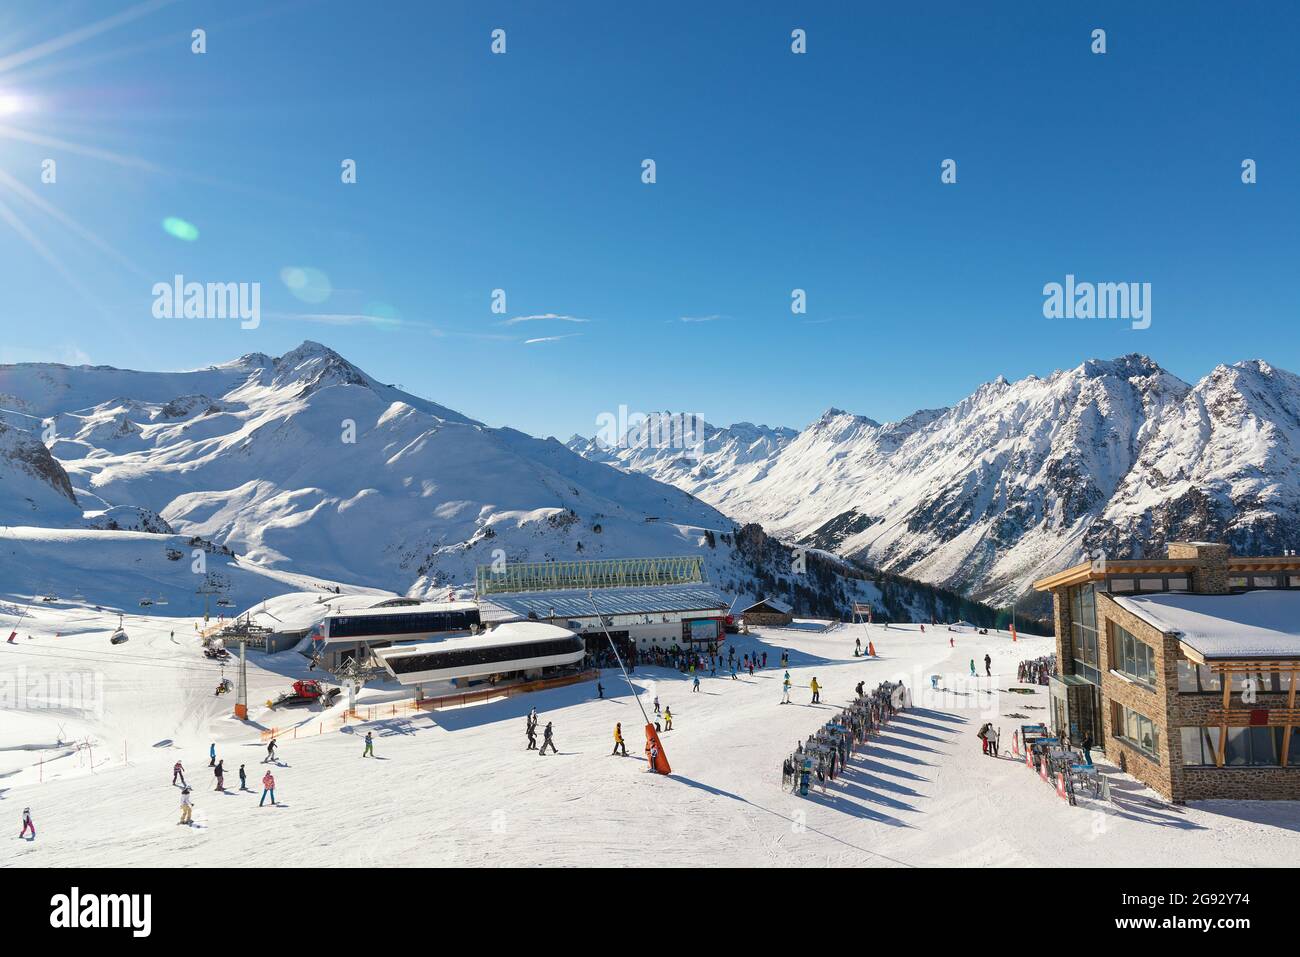 Panorama of the Austrian ski resort of Ischgl. Taken at the main Idalp plateau. Stock Photo